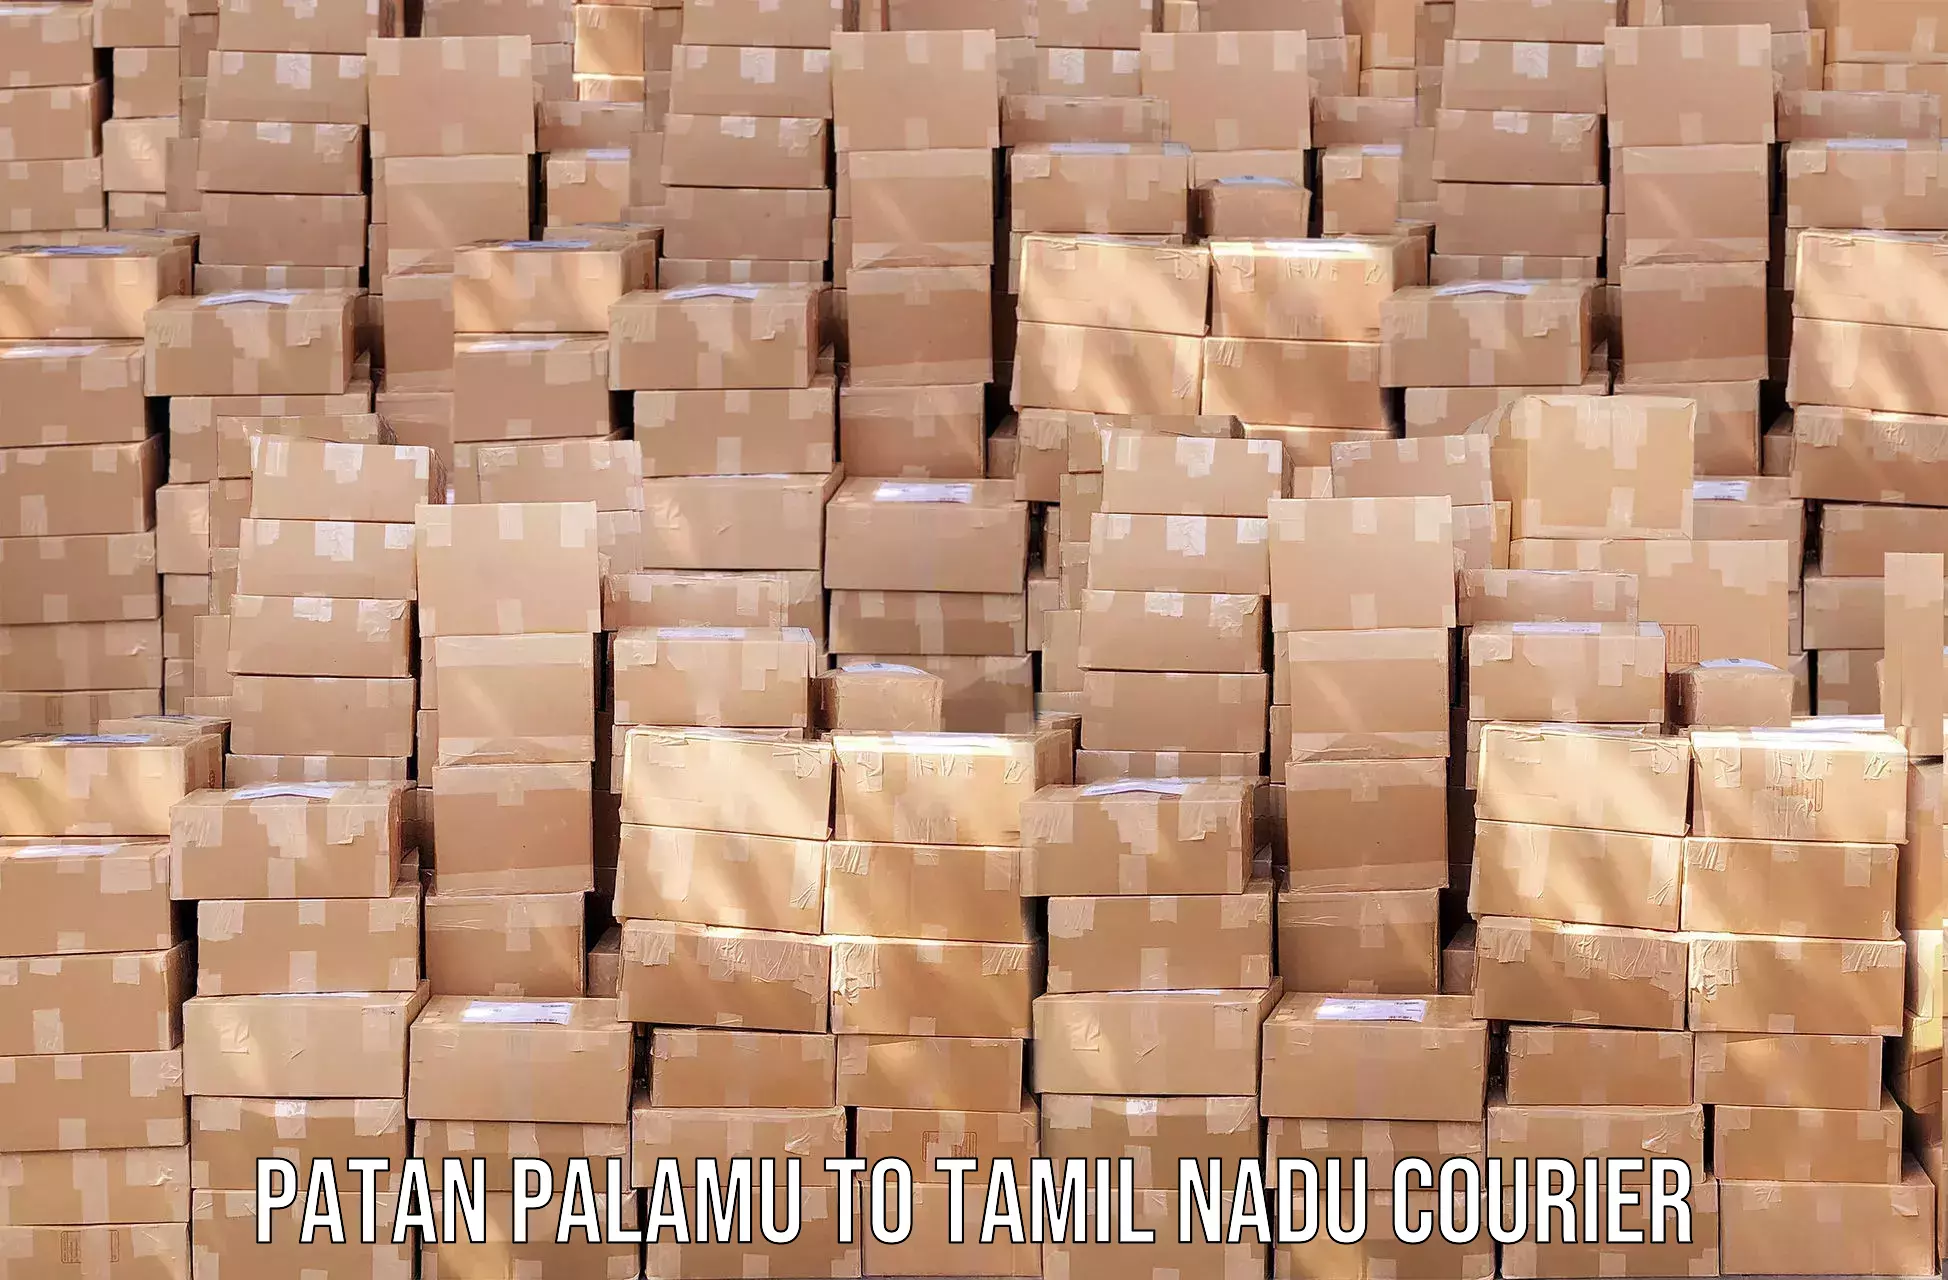 24/7 courier service Patan Palamu to Trichy